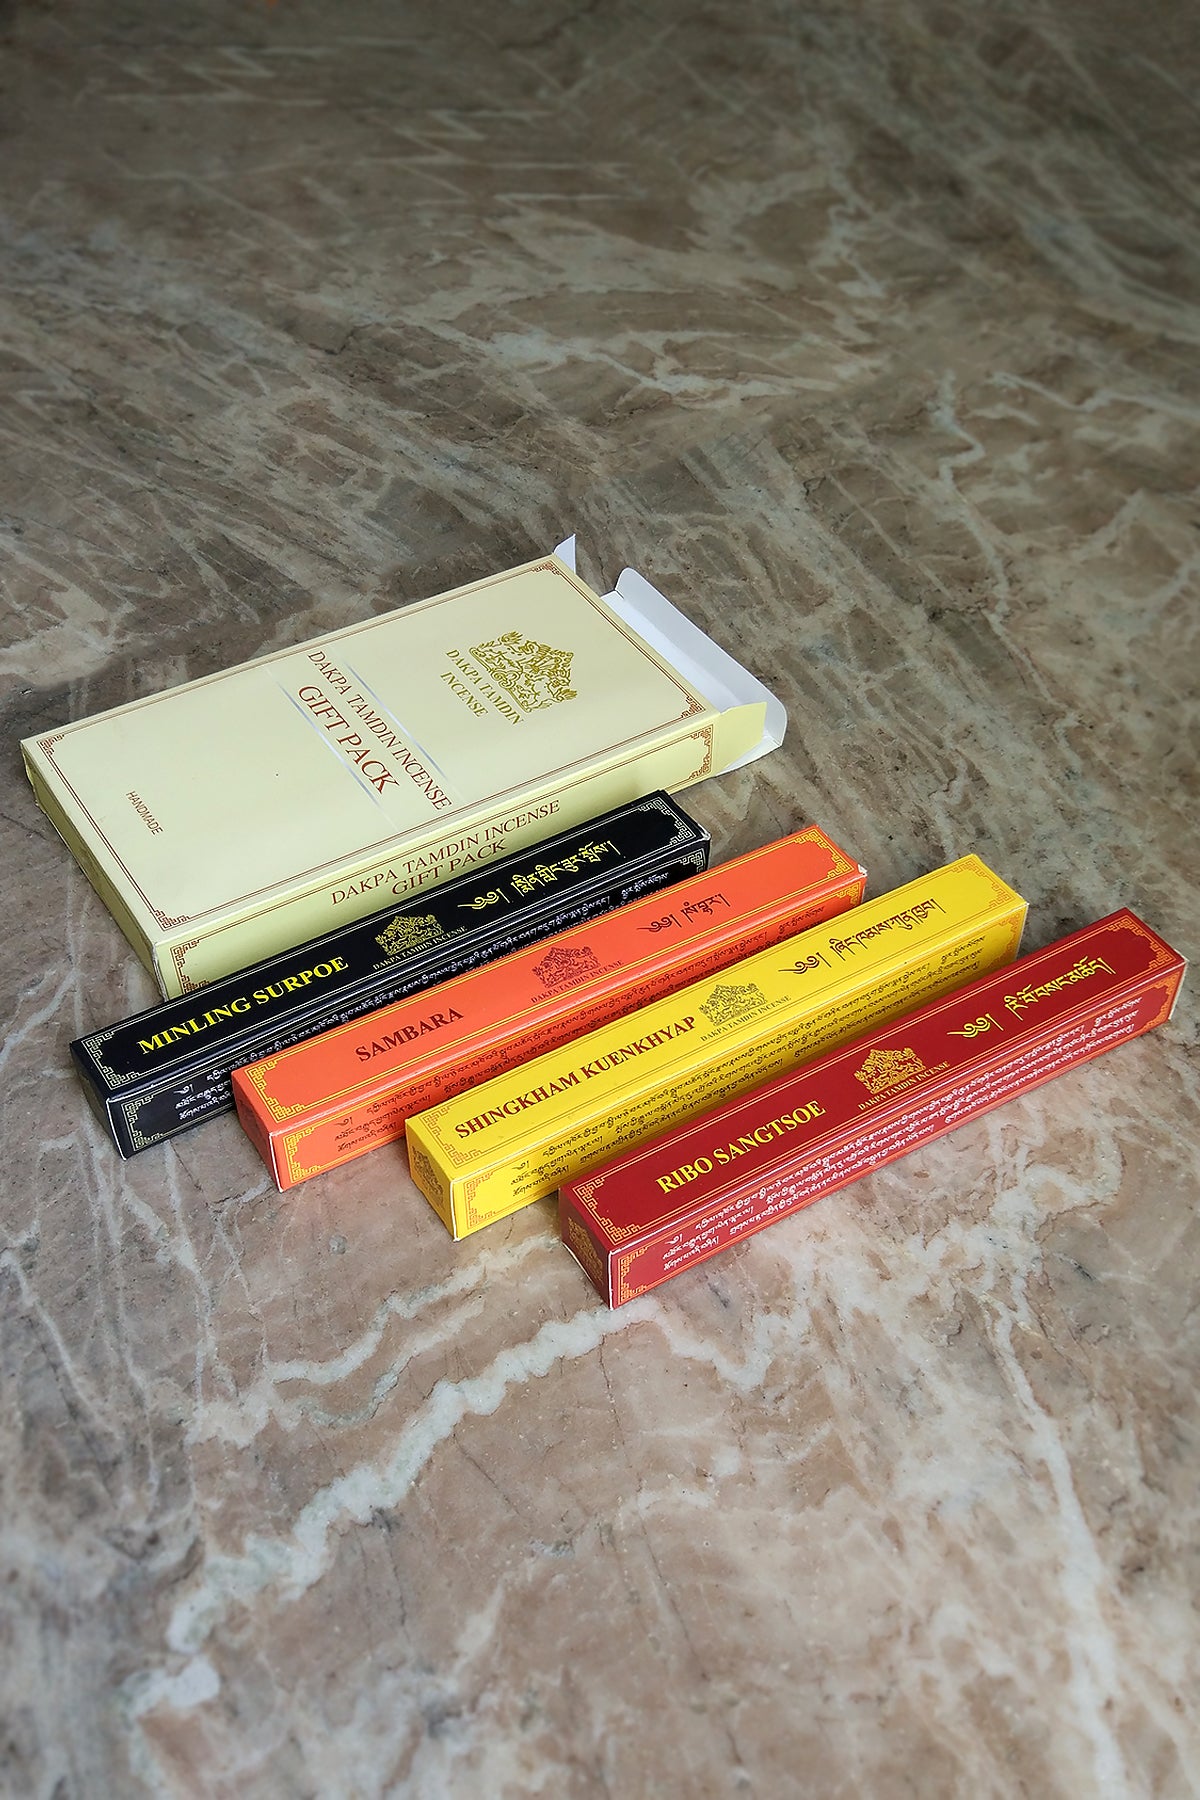 Dakpa Tamdin Incense Gift Pack, Authentic Tibetan 4 in 1 Incense Sticks